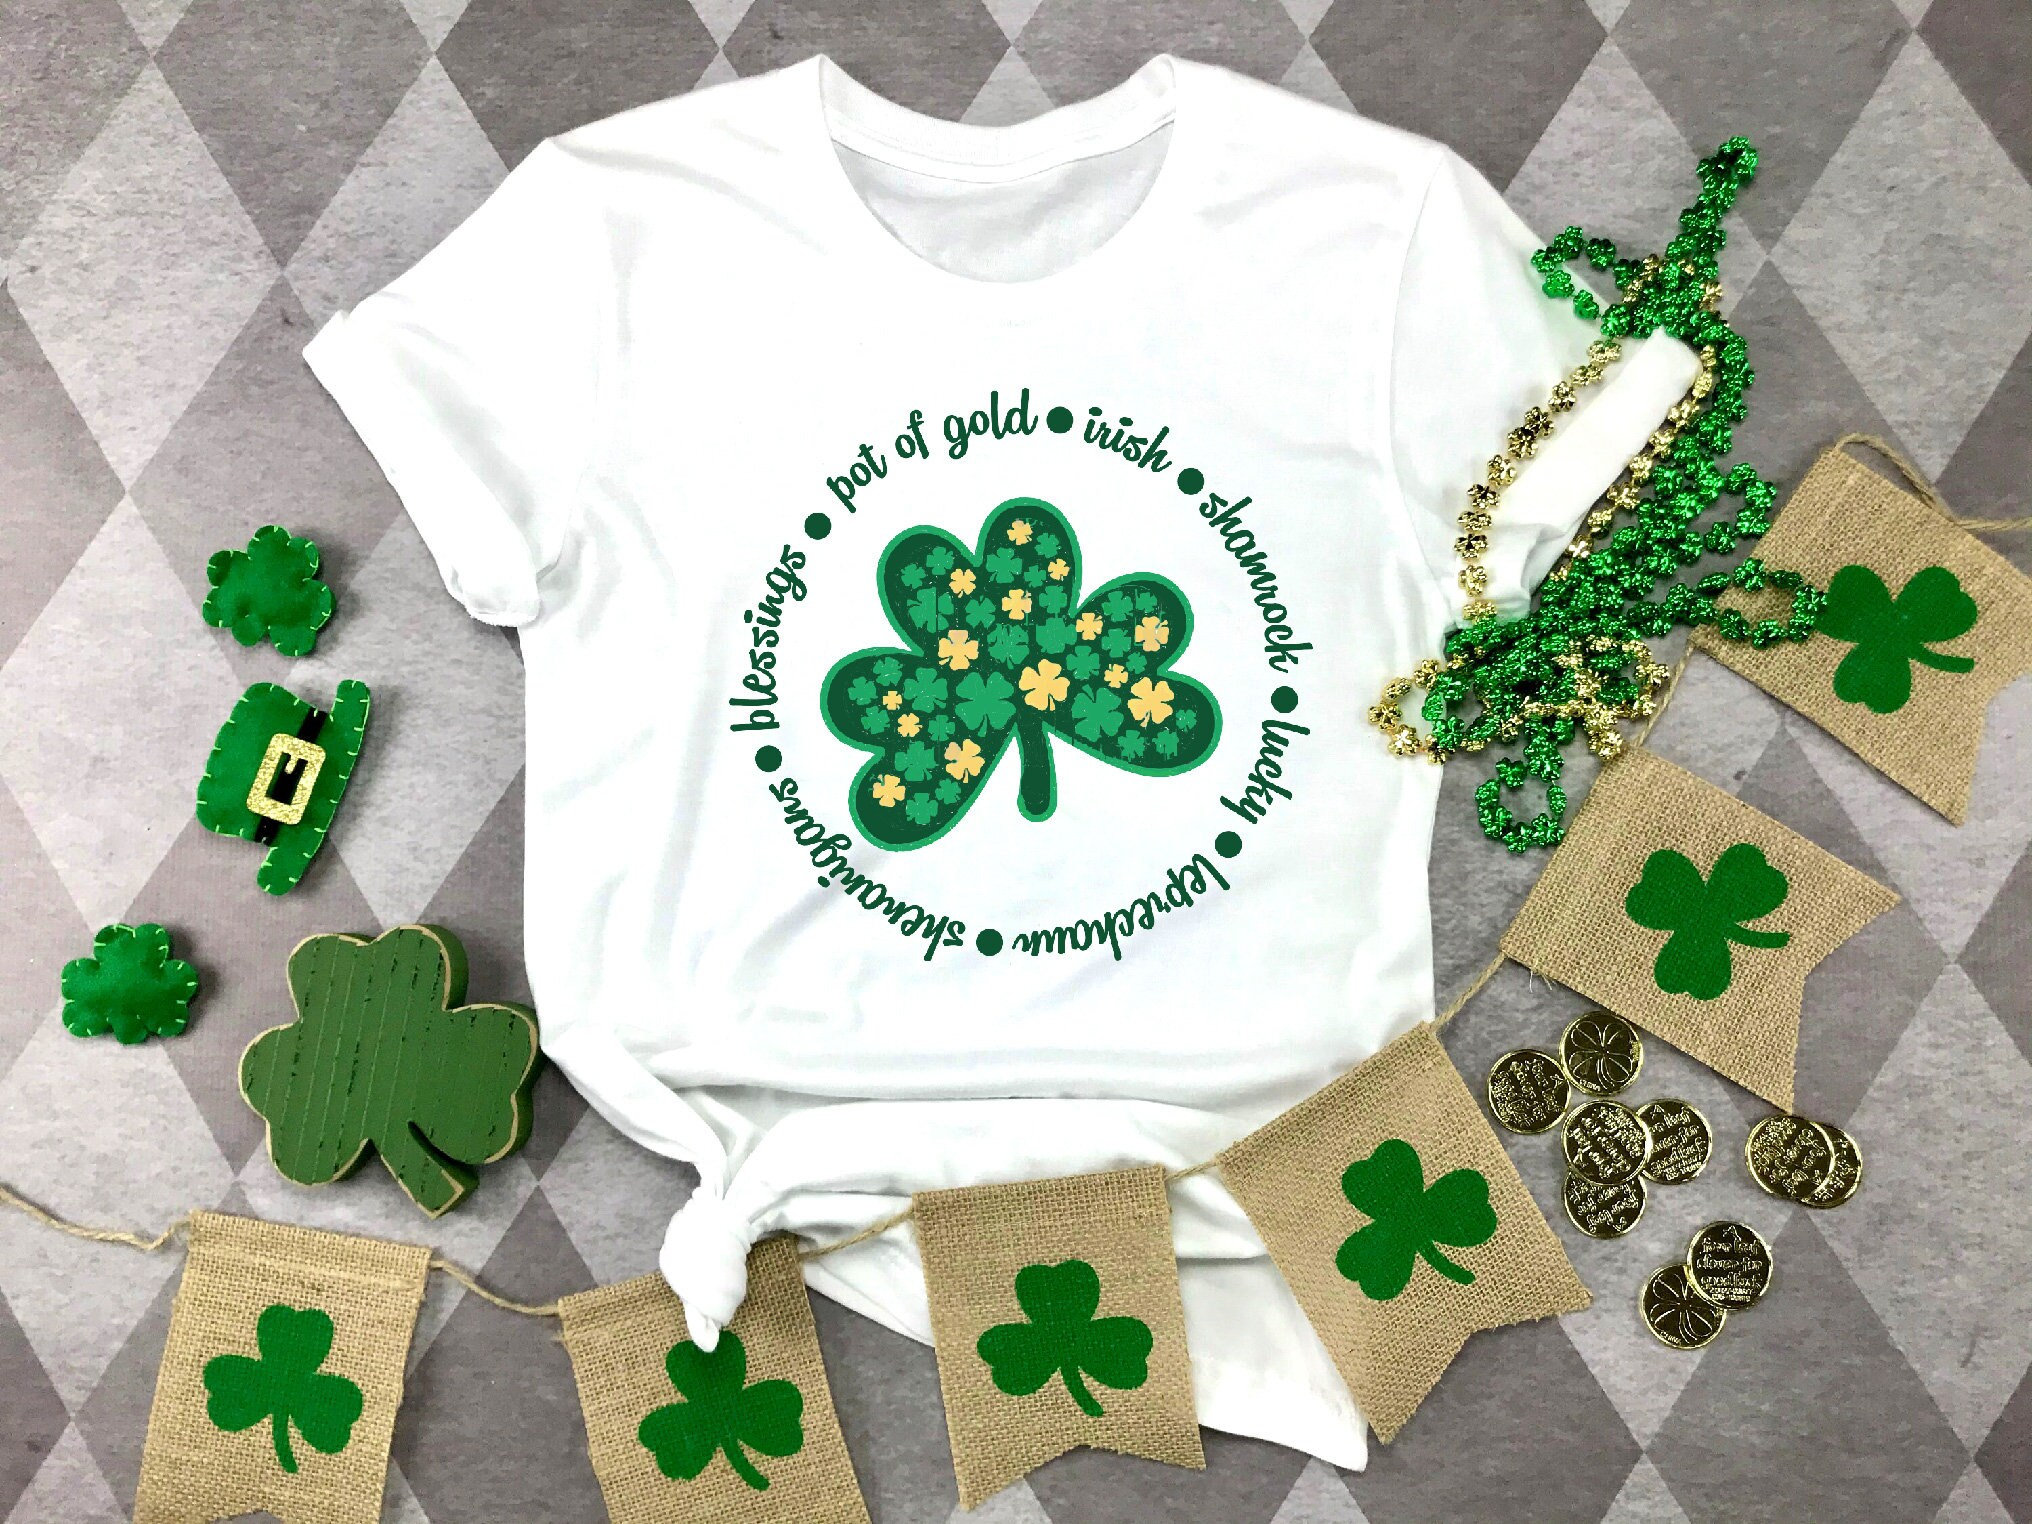 Discover Lucky Clover Shirt,Pot of Gold,Irish,Shamrock,Lucky,Leprechaun,Shenanigan